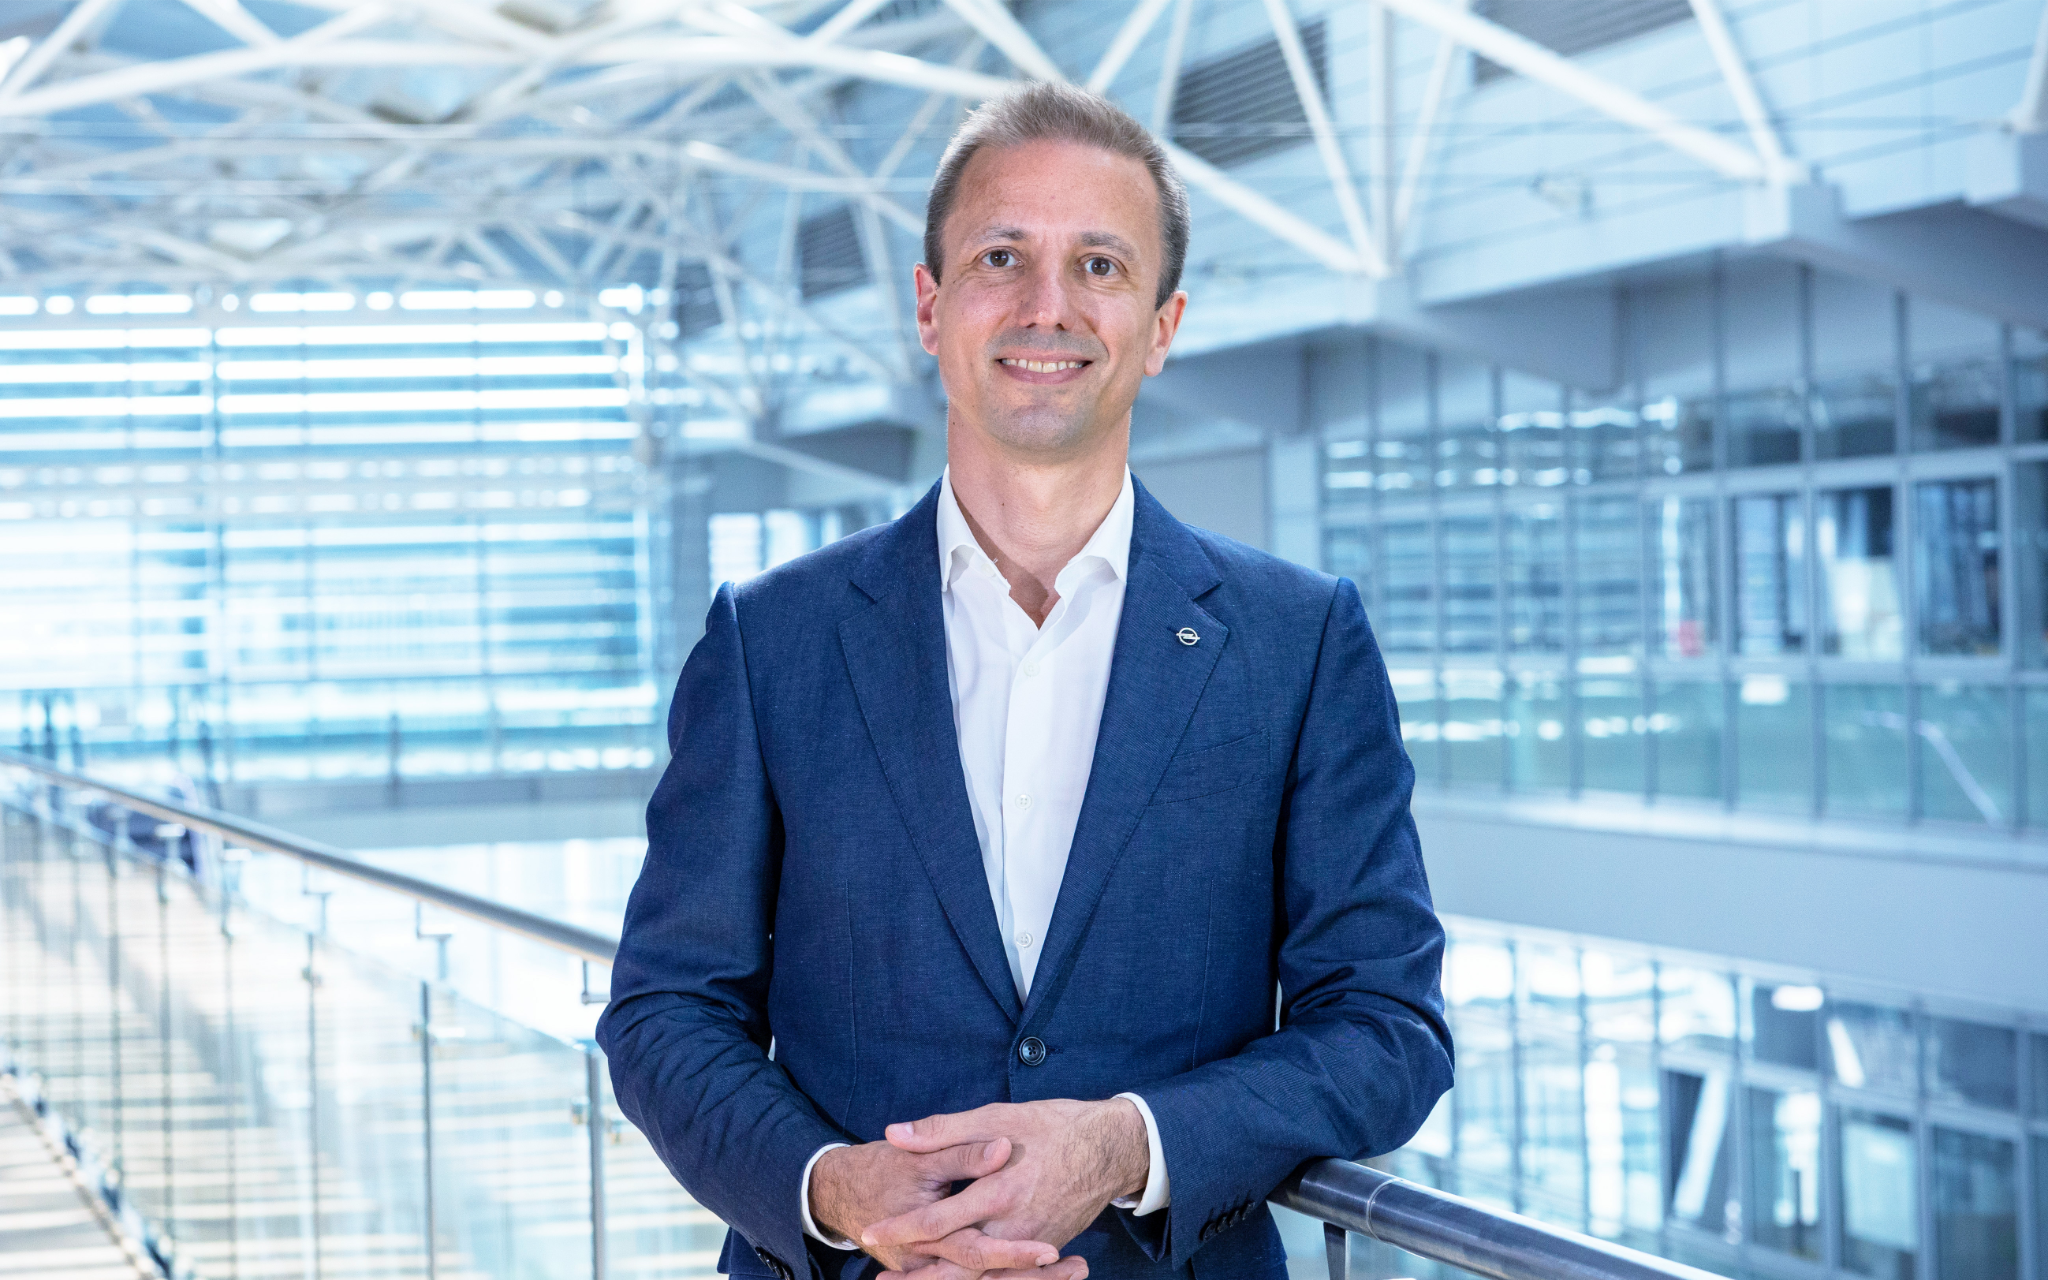 Le PDG d'Opel, Florian Huettl, veut augmenter ses ventes au Maroc